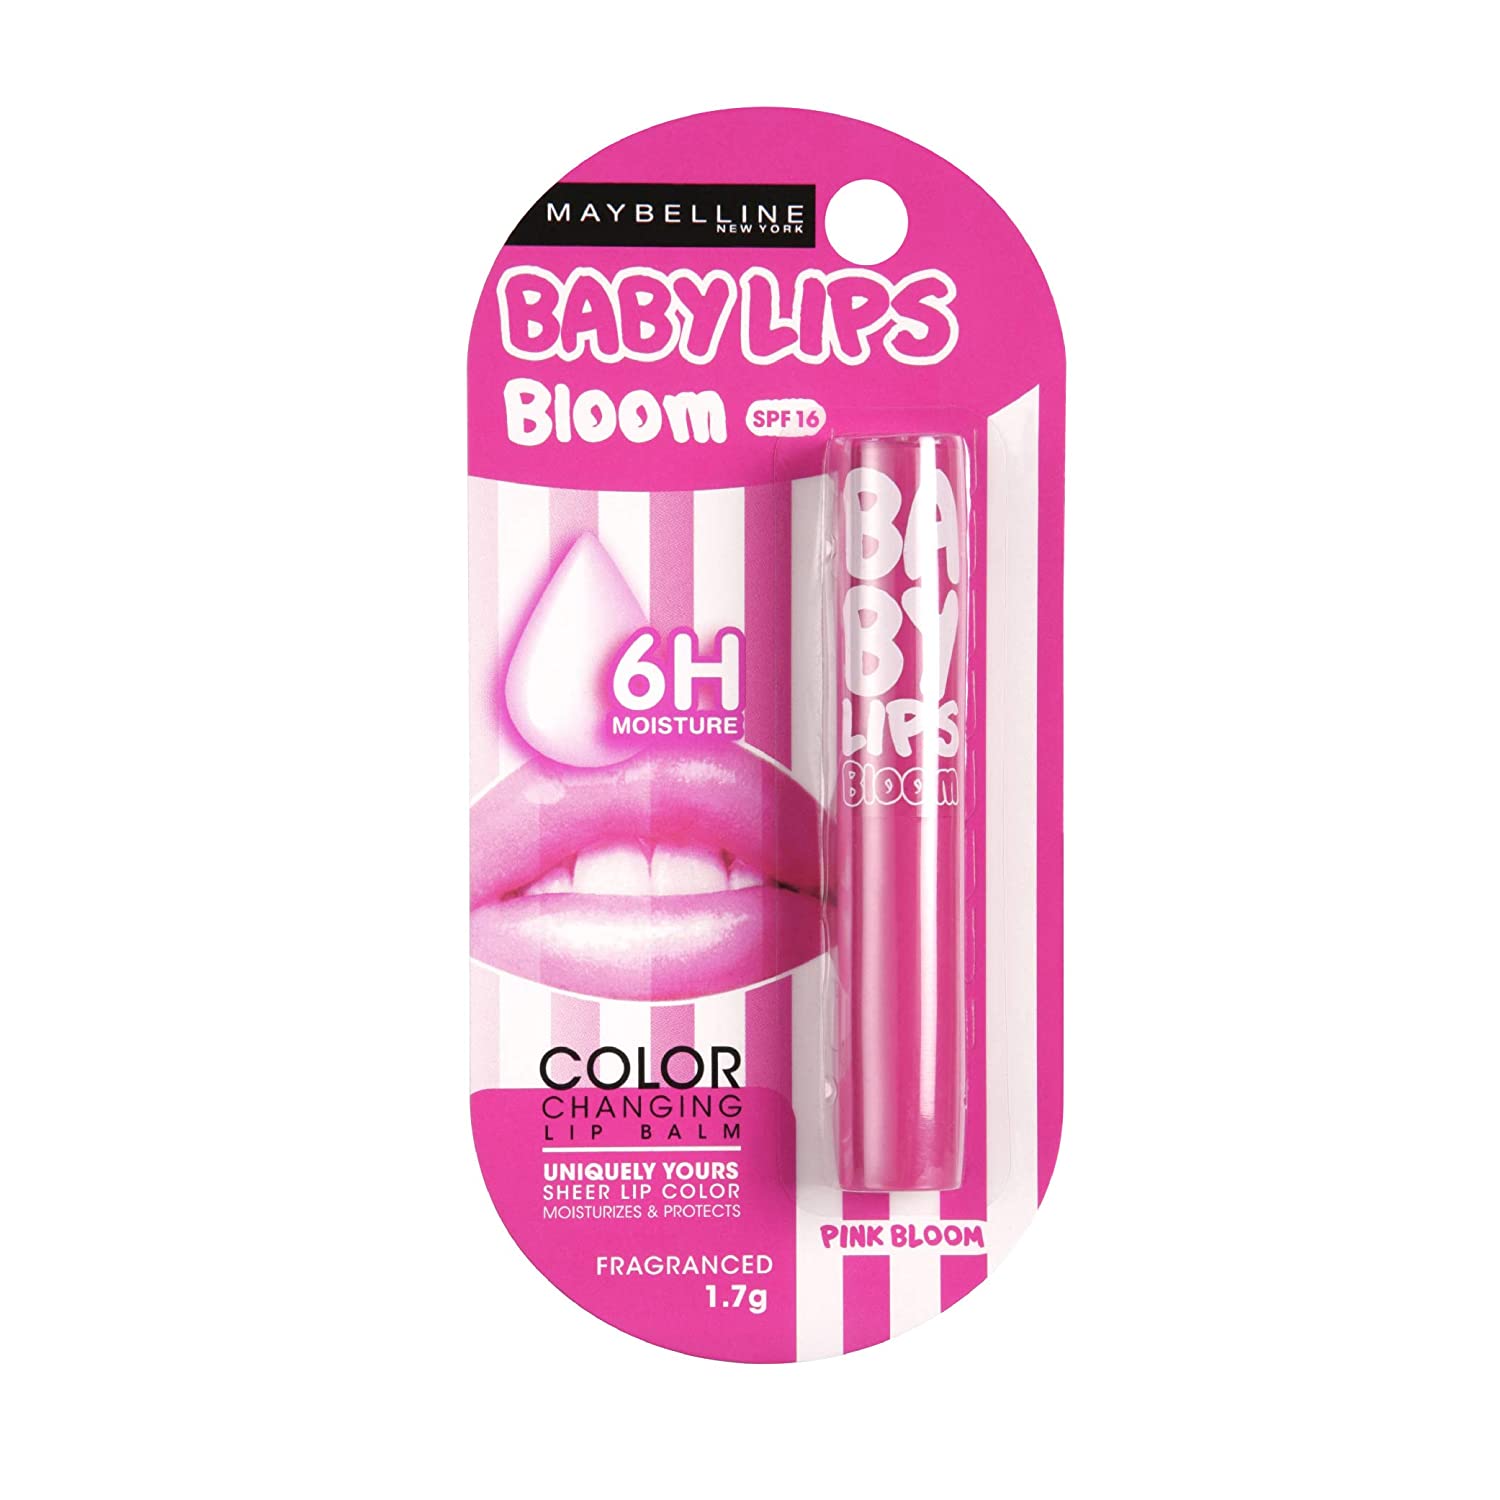 Maybelline moisturizing lip balm